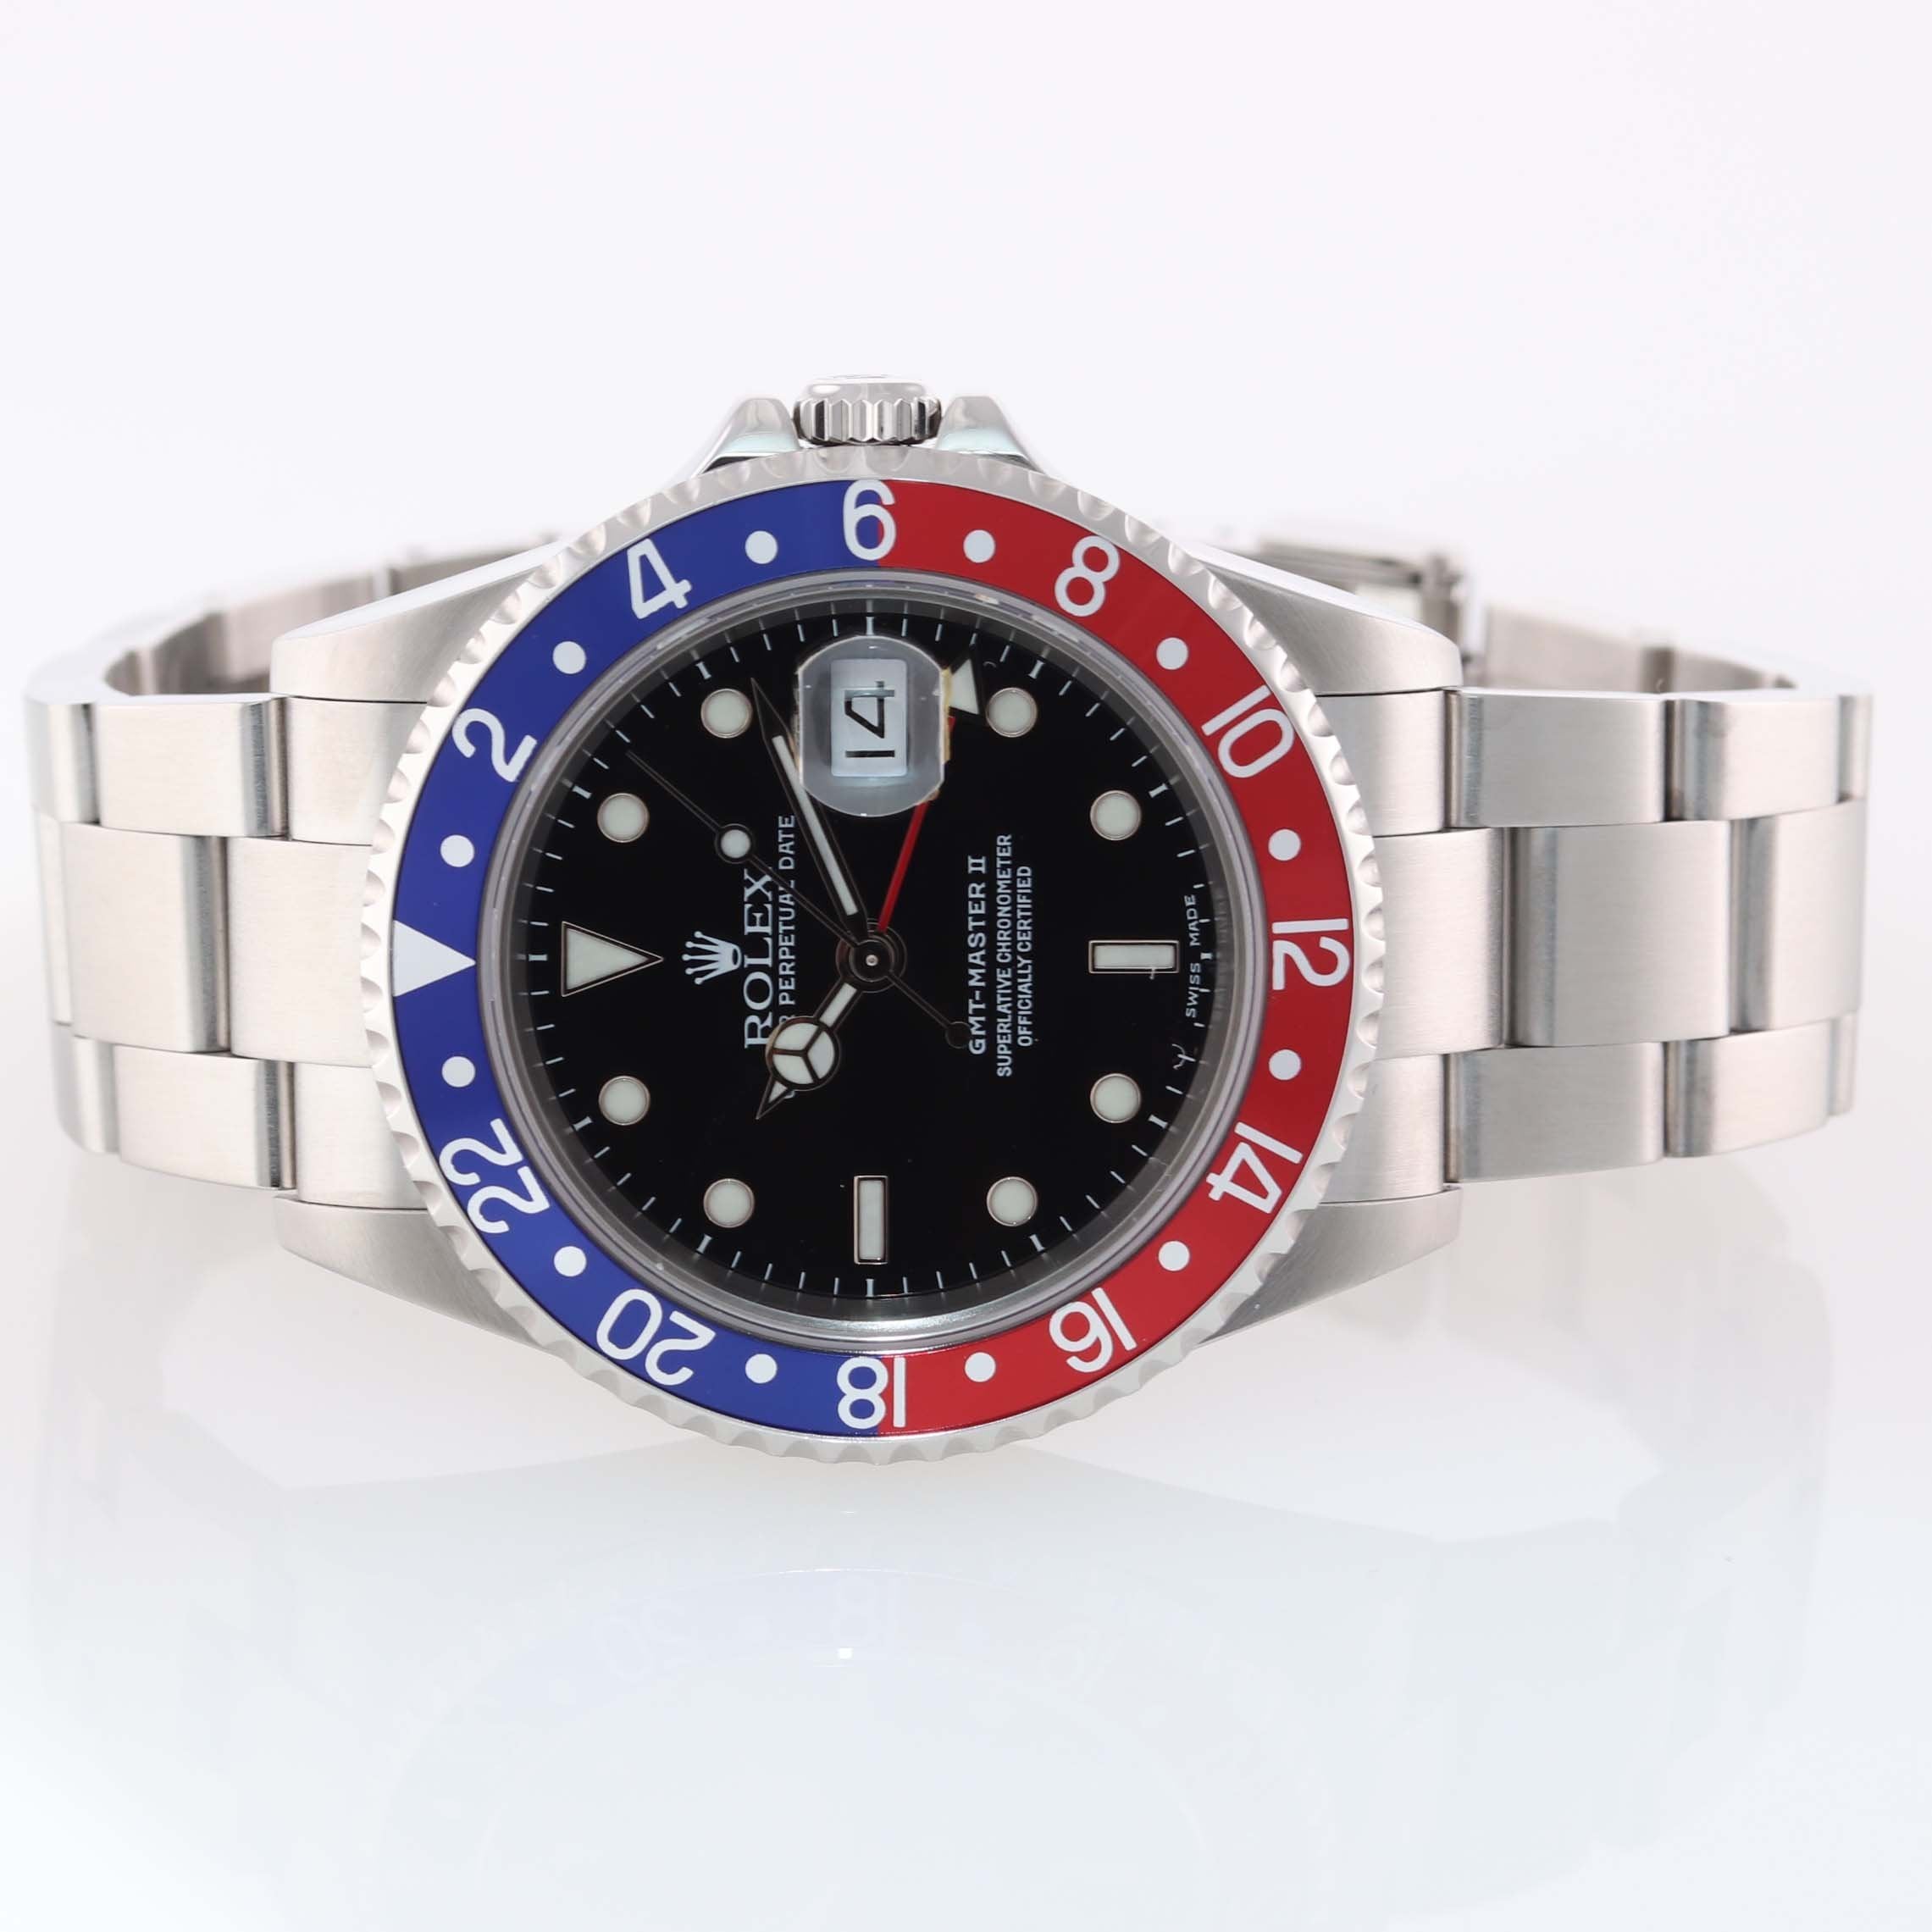 2004 Rolex GMT-Master 2 Pepsi Steel 16710 40mm Watch No Holes Black Dial Watch